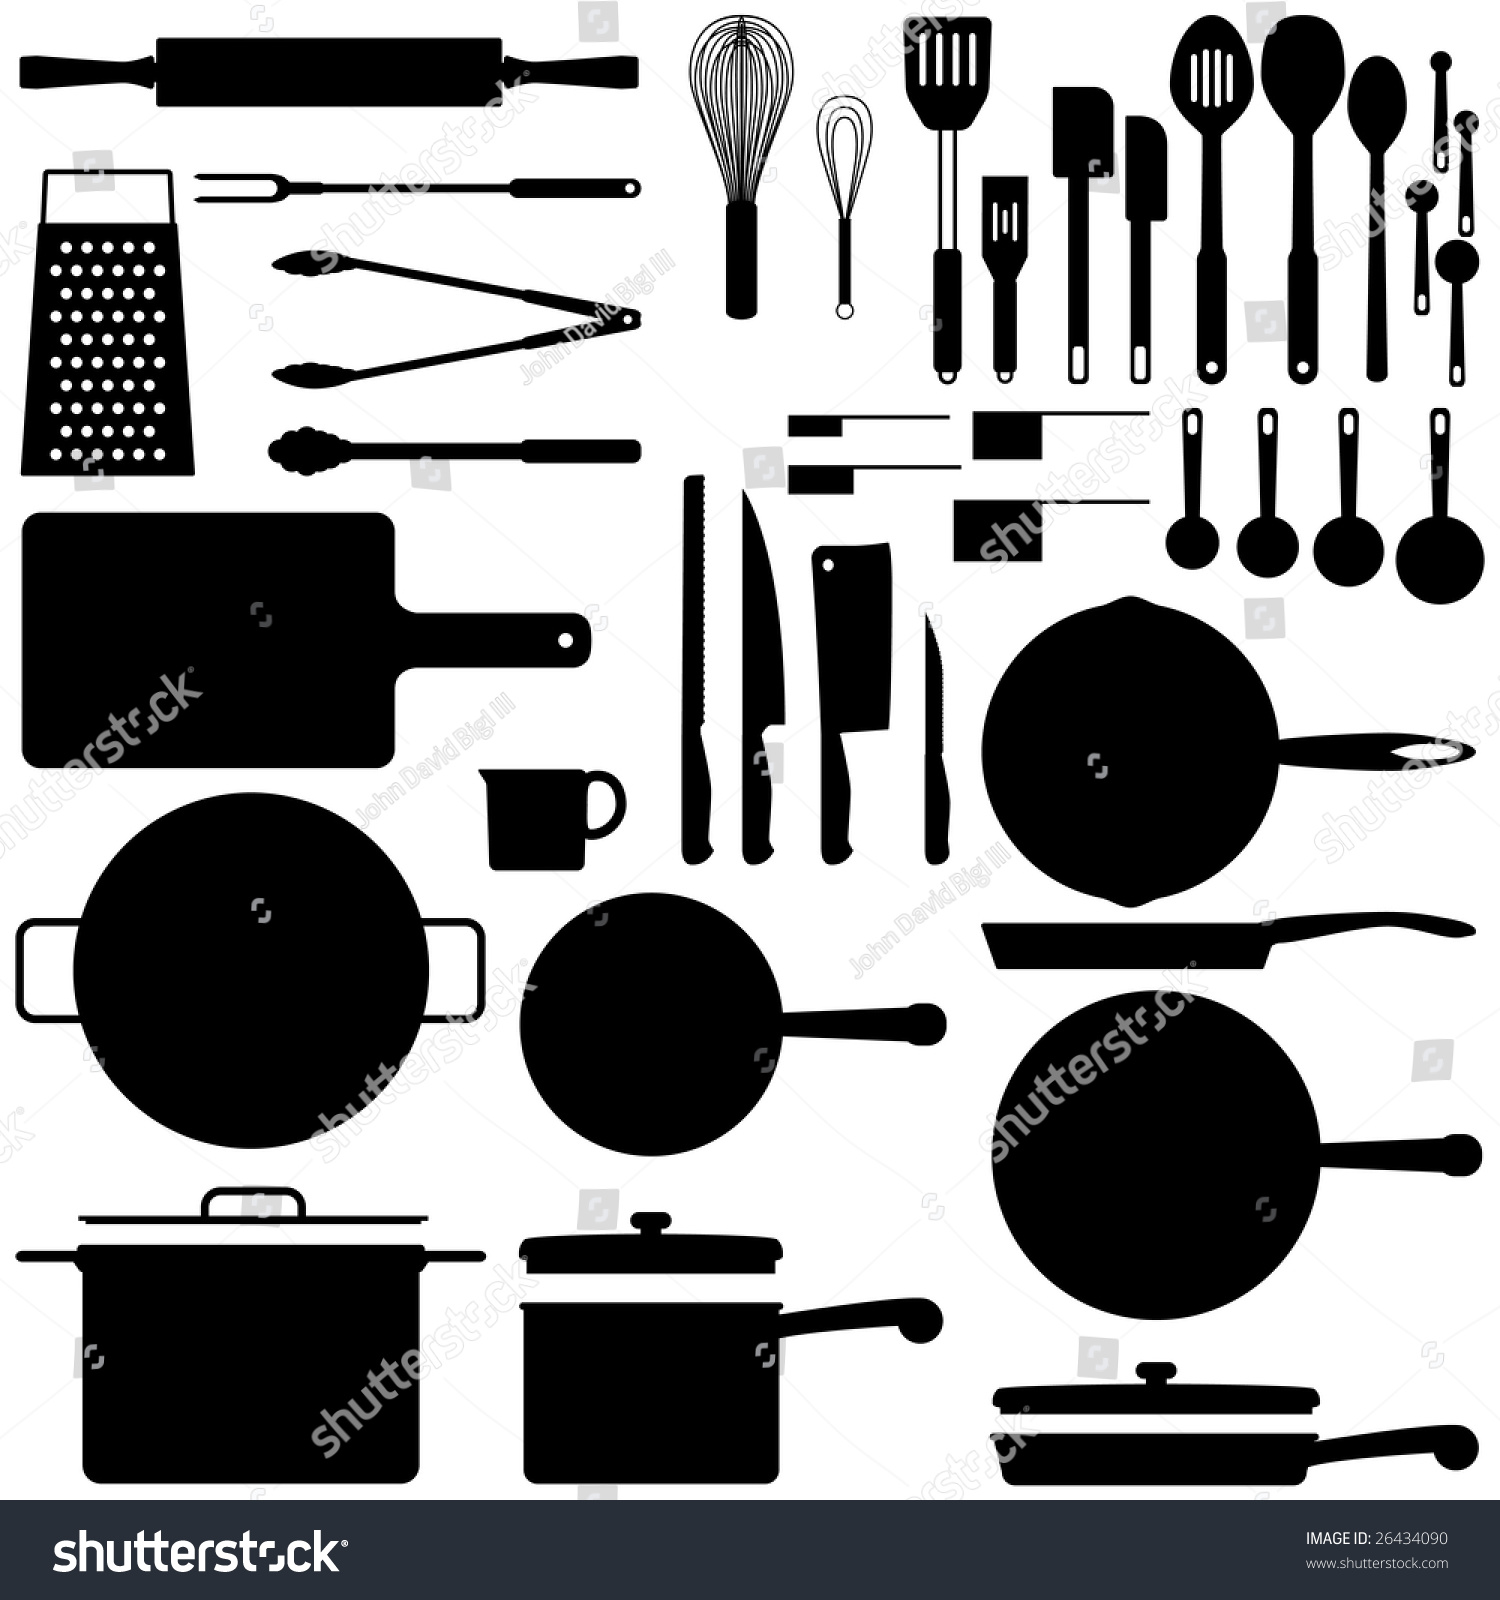 kitchen silhouette clip art - photo #43